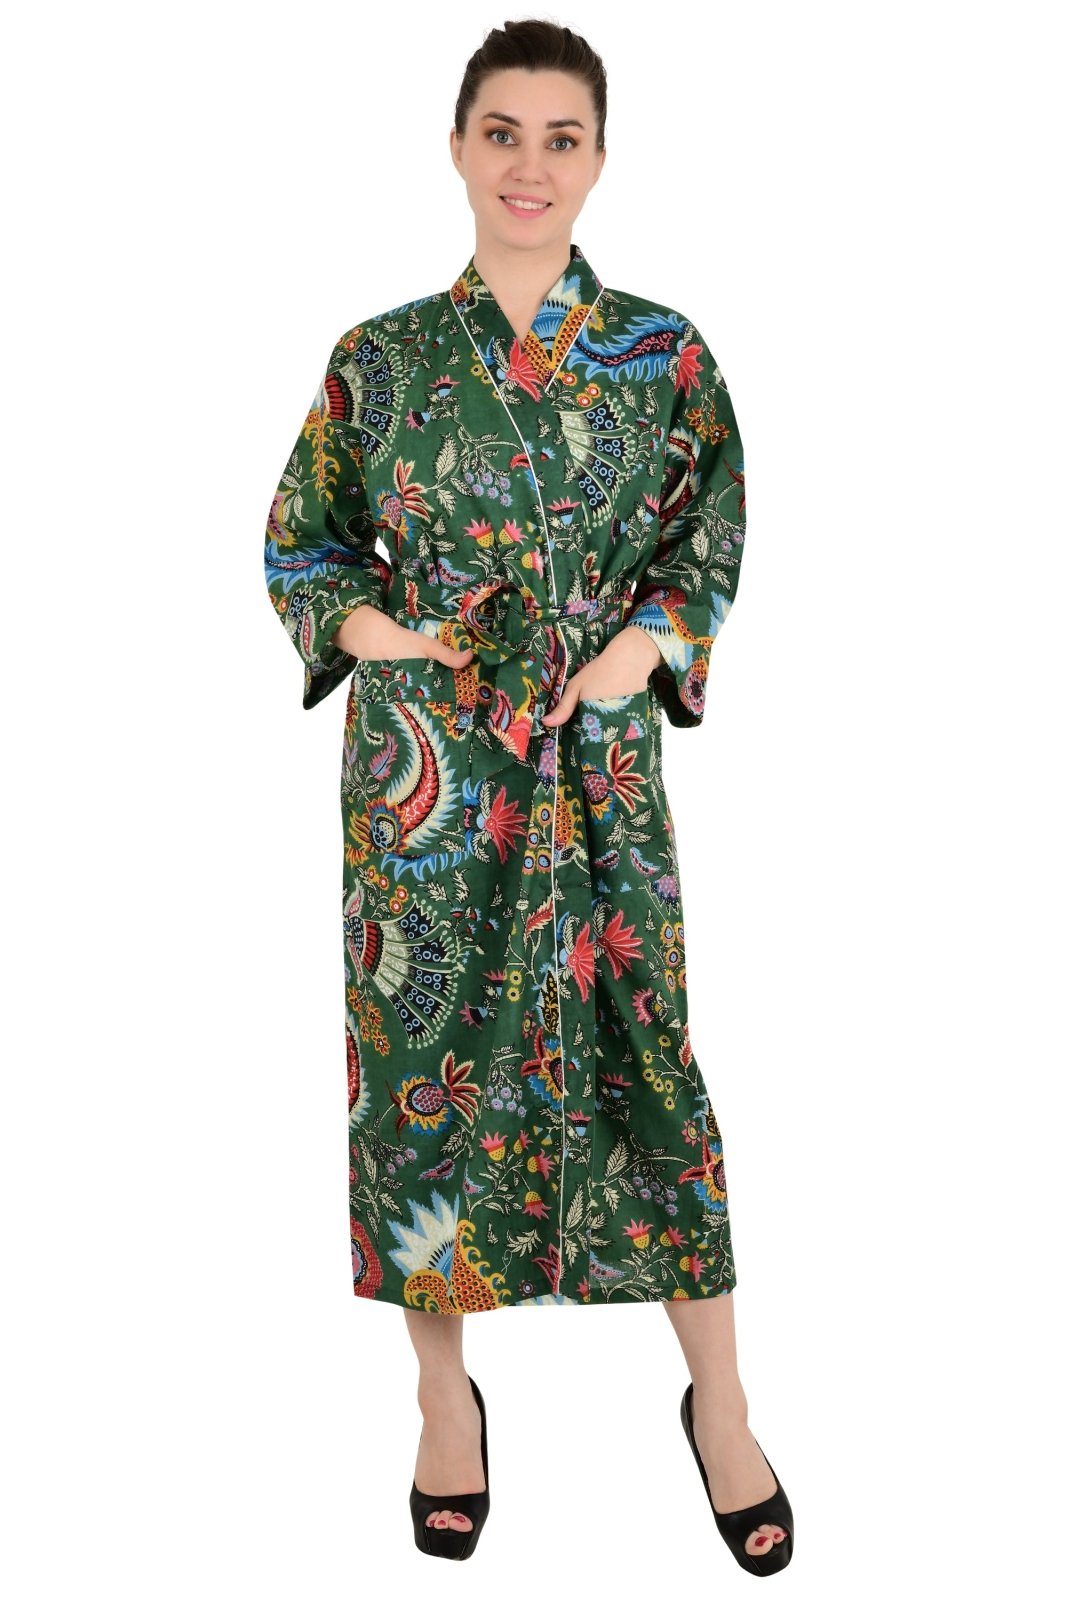 Boho Cotton Kimono House Robe Indian Handprinted Botanical Print Pattern | Lightweight Summer Luxury Beach Holidays Yacht Cover Up Stunning Dress - The Eastern Loom